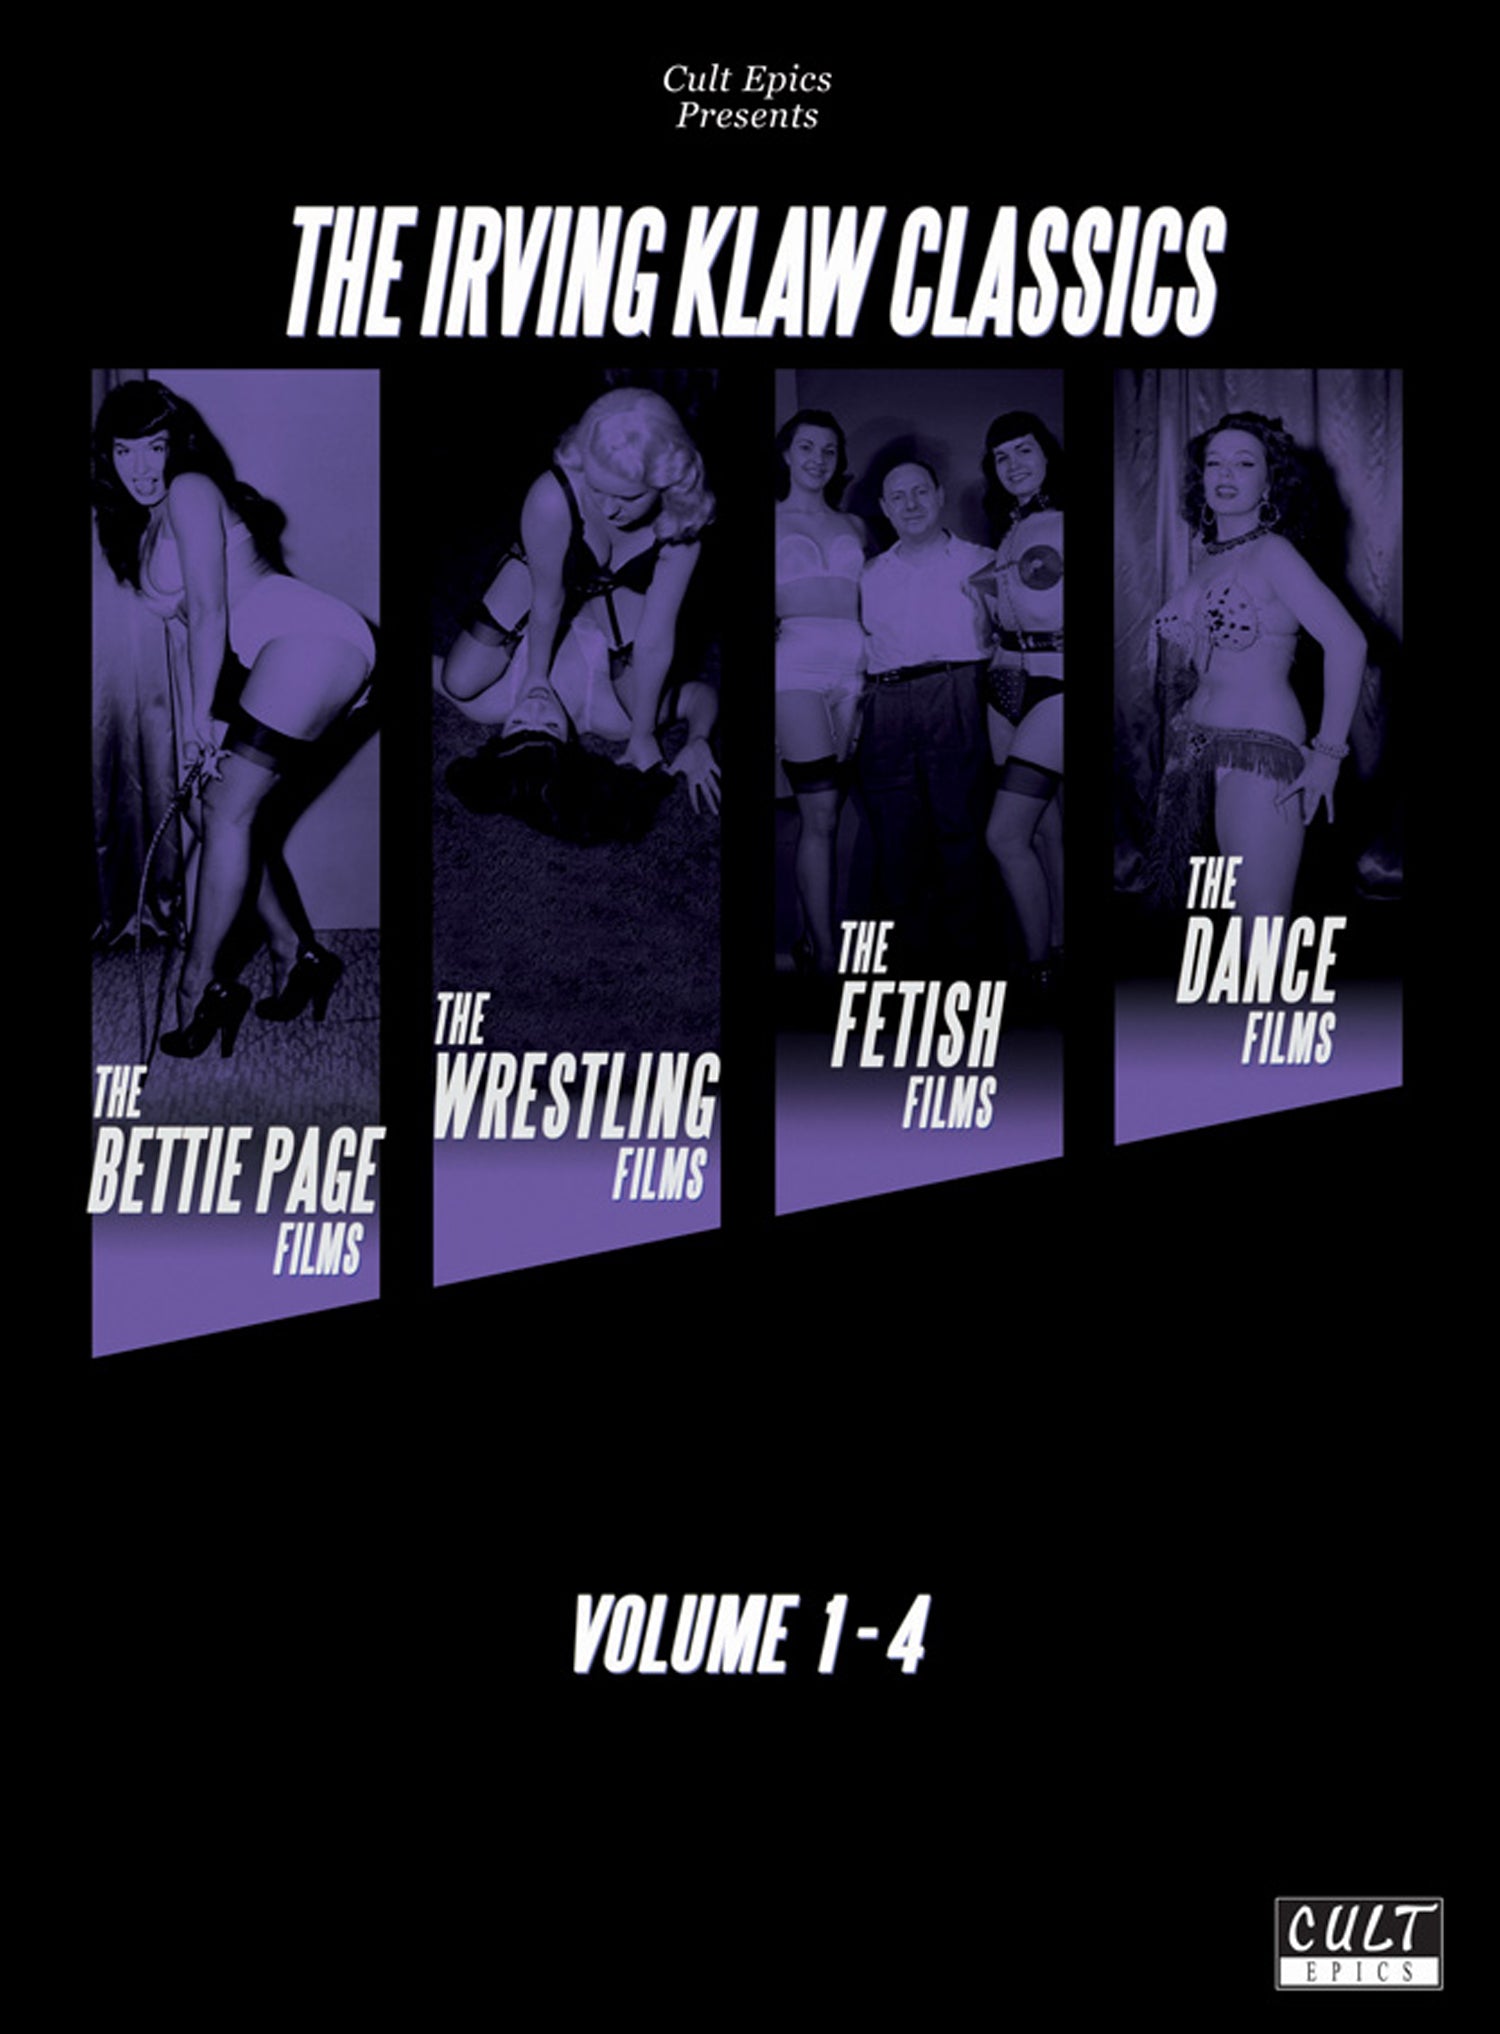 THE IRVING KLAW CLASSICS VOLUMES 1-4 DVD